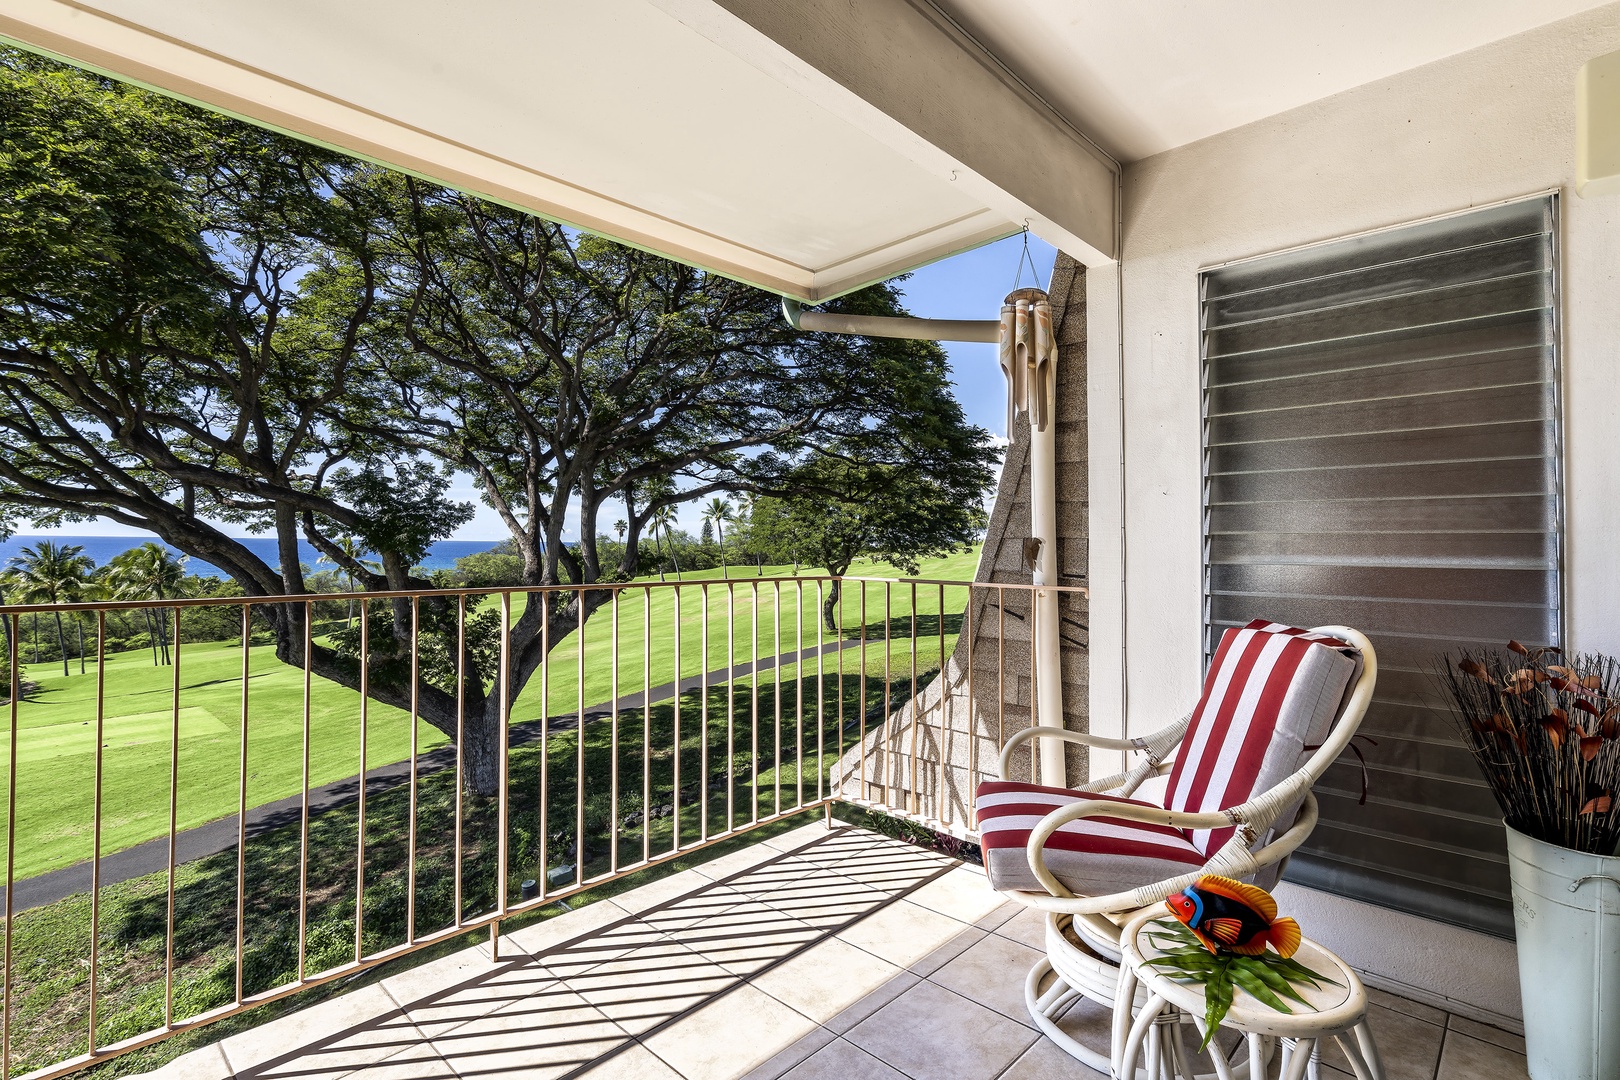 Kailua Kona Vacation Rentals, Keauhou Akahi 312 - Additional Lanai seating with Ocean views